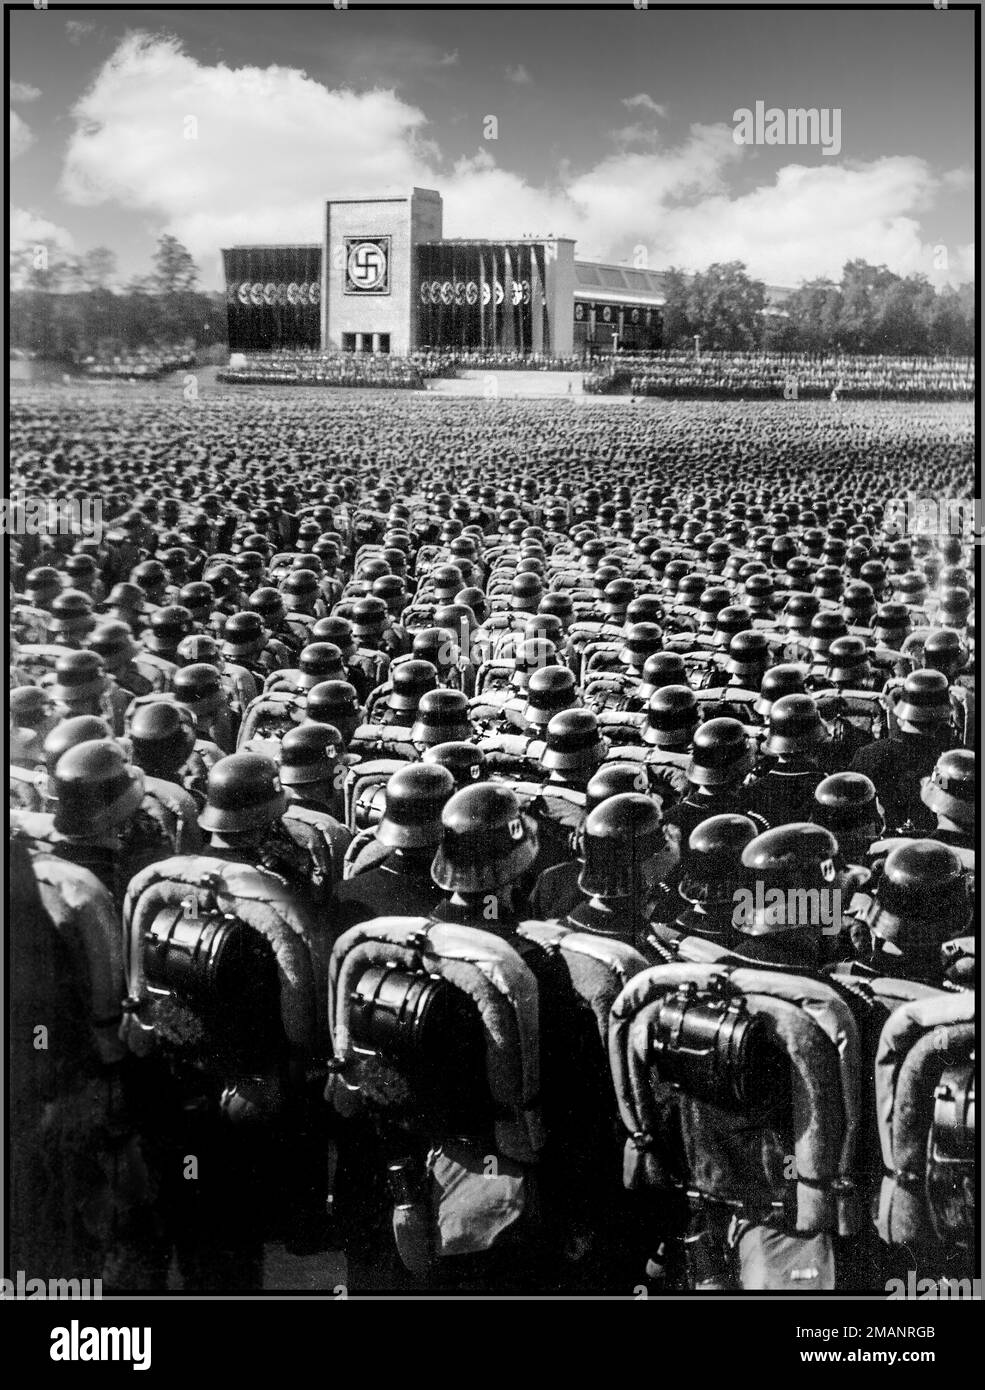 REICHSPARTEITAG Nazi military uniforms helmets precision mass roll call of SA, SS, and NSKK troops. at Nuremberg, Nazi Germany November 9, 1935 Stock Photo